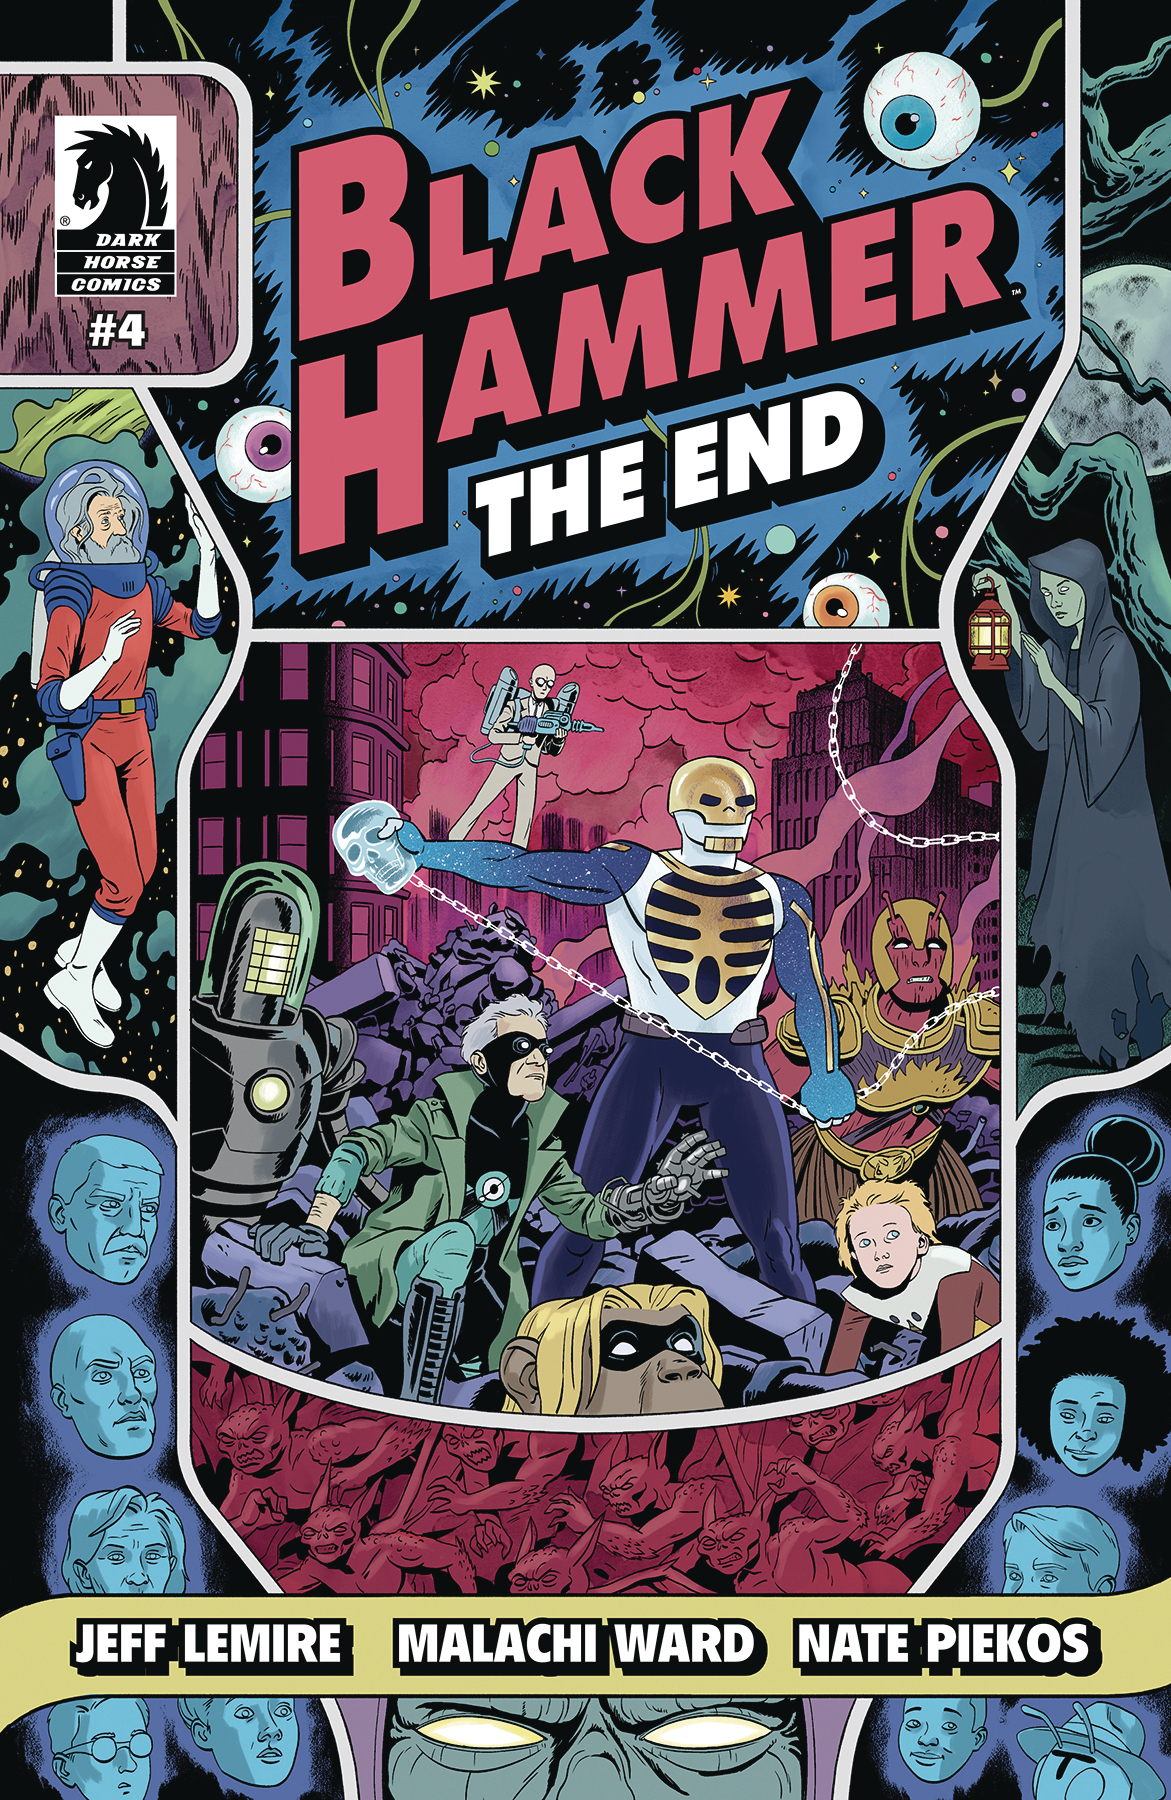 Black Hammer: The End #4 Cover A (Malachi Ward)